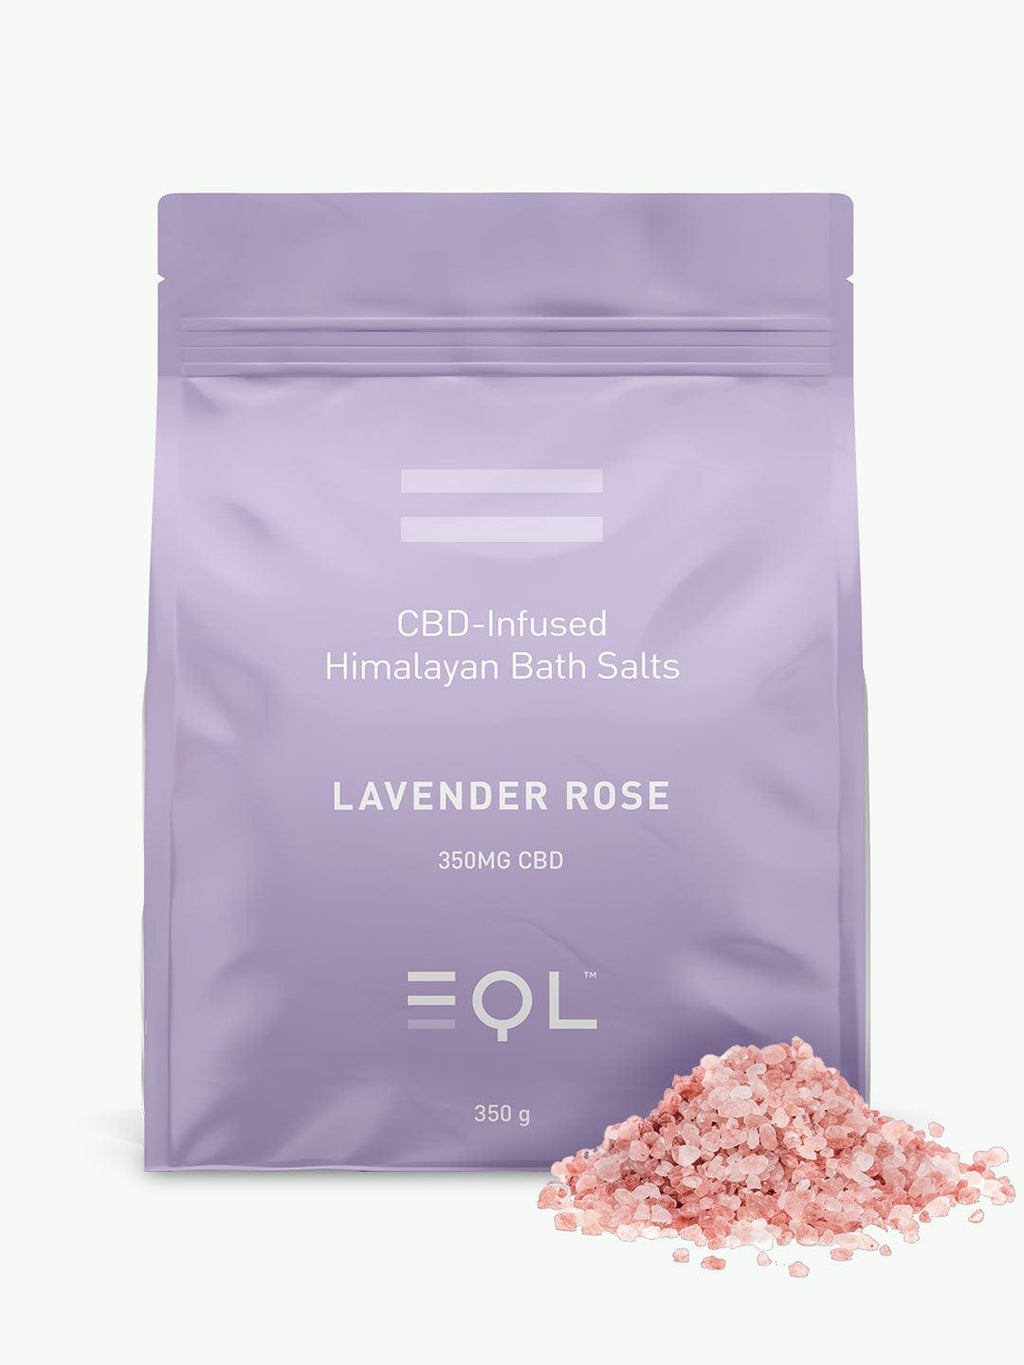 Lavender Rose - 350g CBD-Infused Himalayan Bath Salts